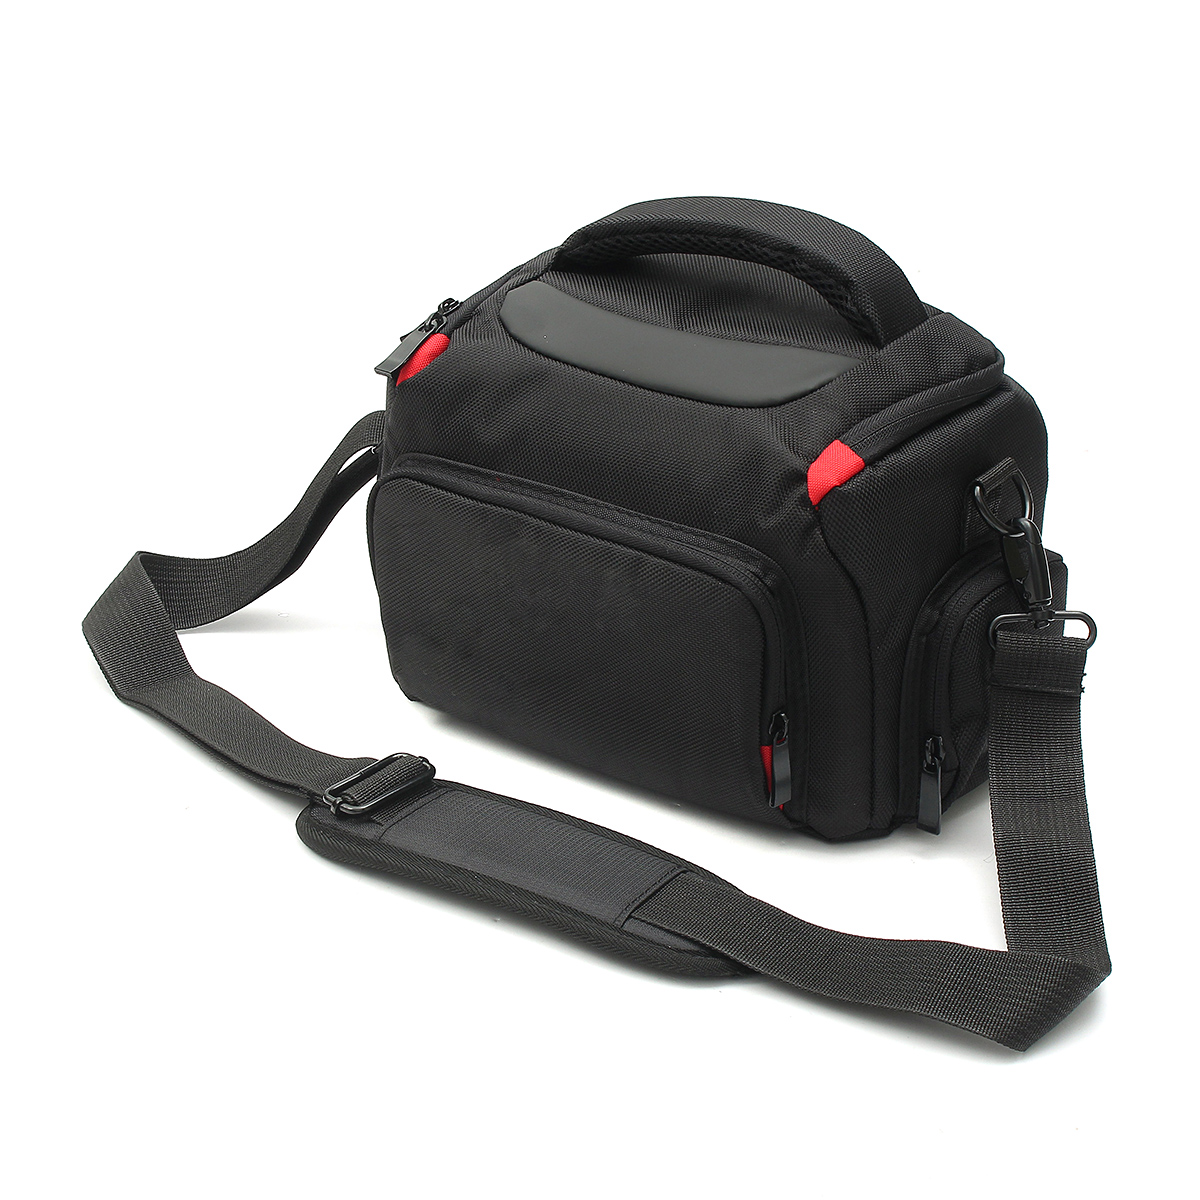 Camera-Storage-Travel-Carry-Bag-with-Rain-Cover-Strap-for-DSLR-SLR-Camera-Camera-Lens-Flash-1632987-2